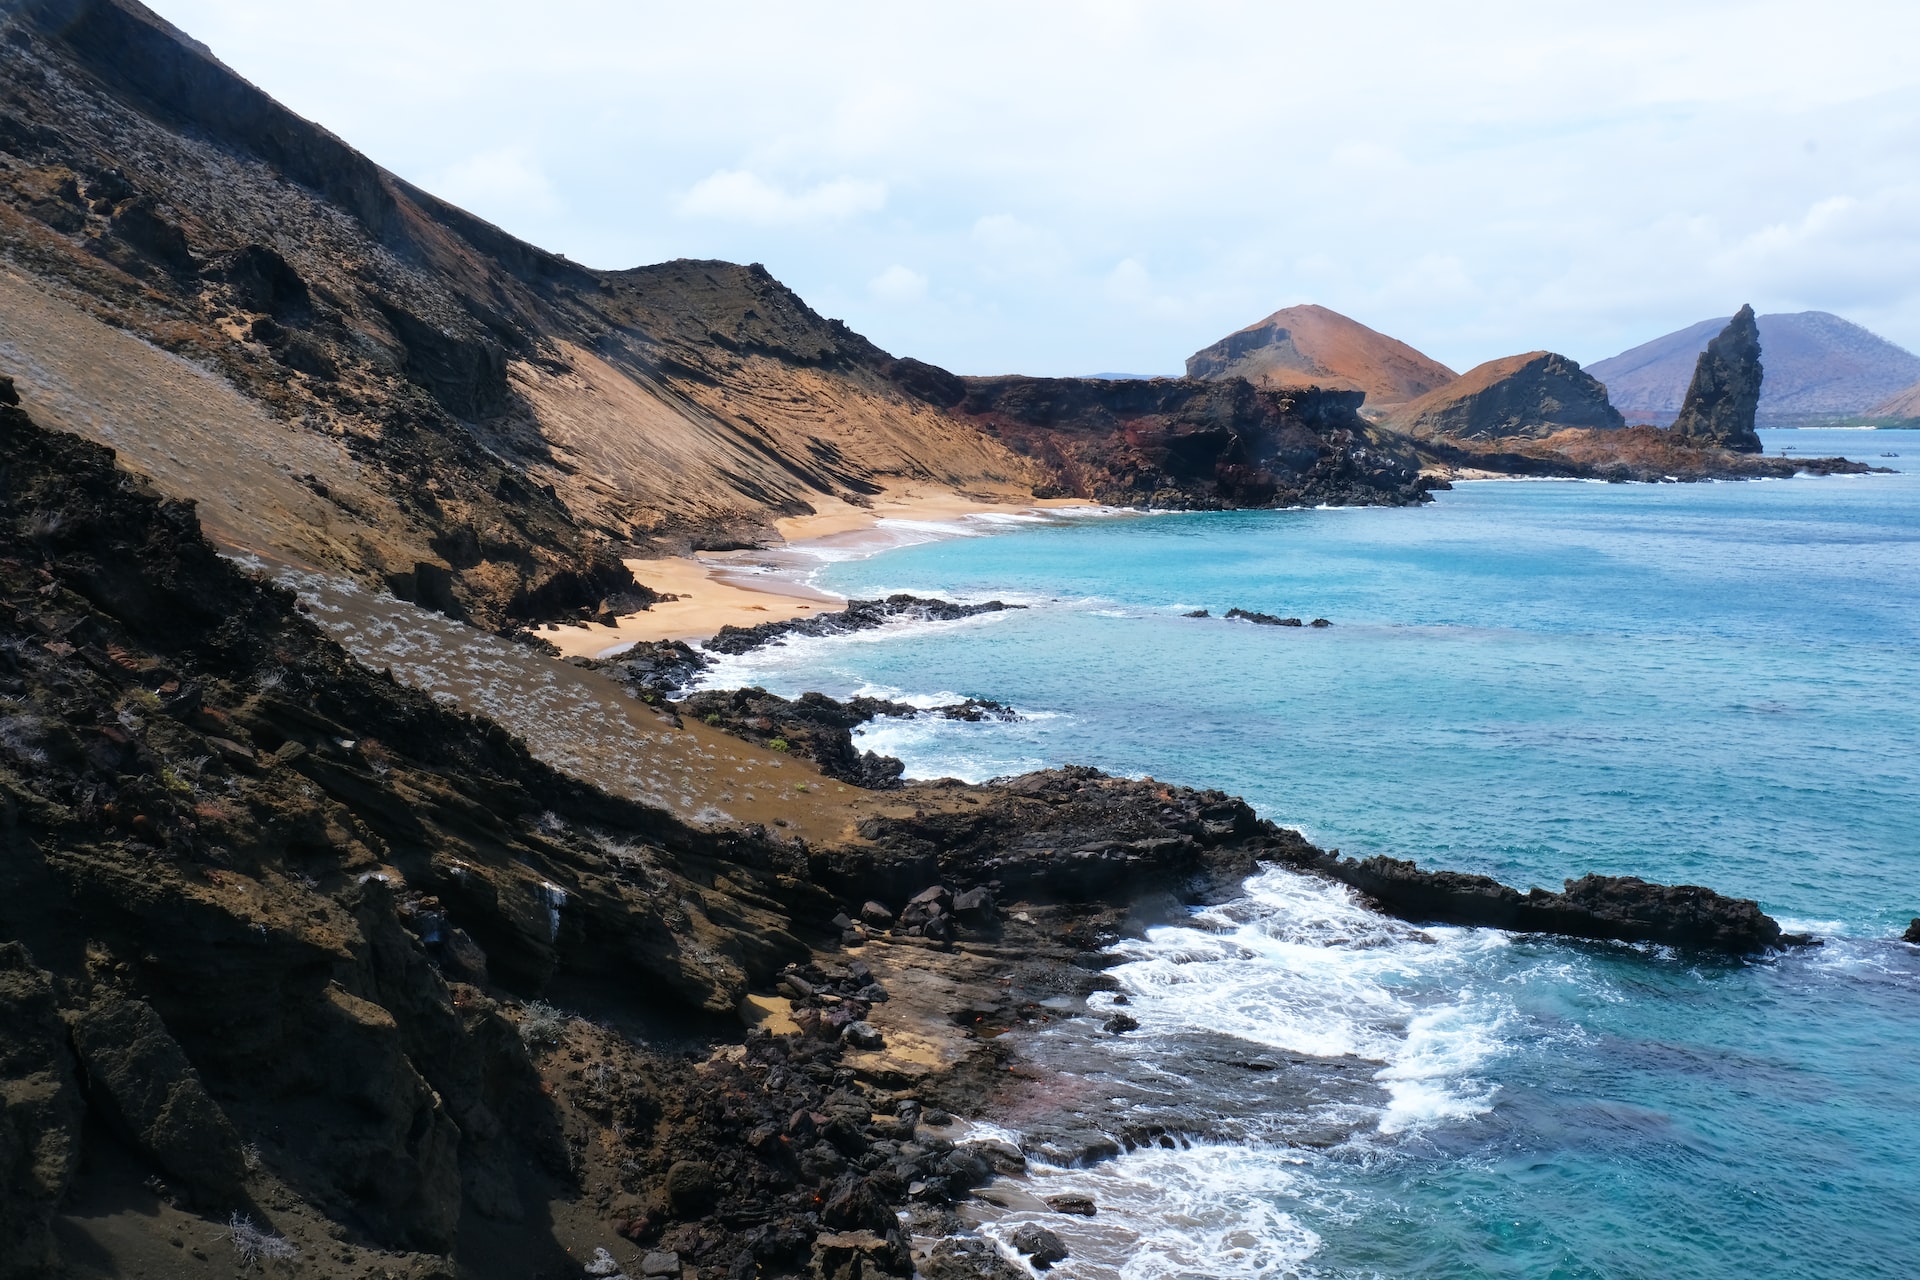 Image of Galapagos Islands by Nathalie Marquis via Unsplash